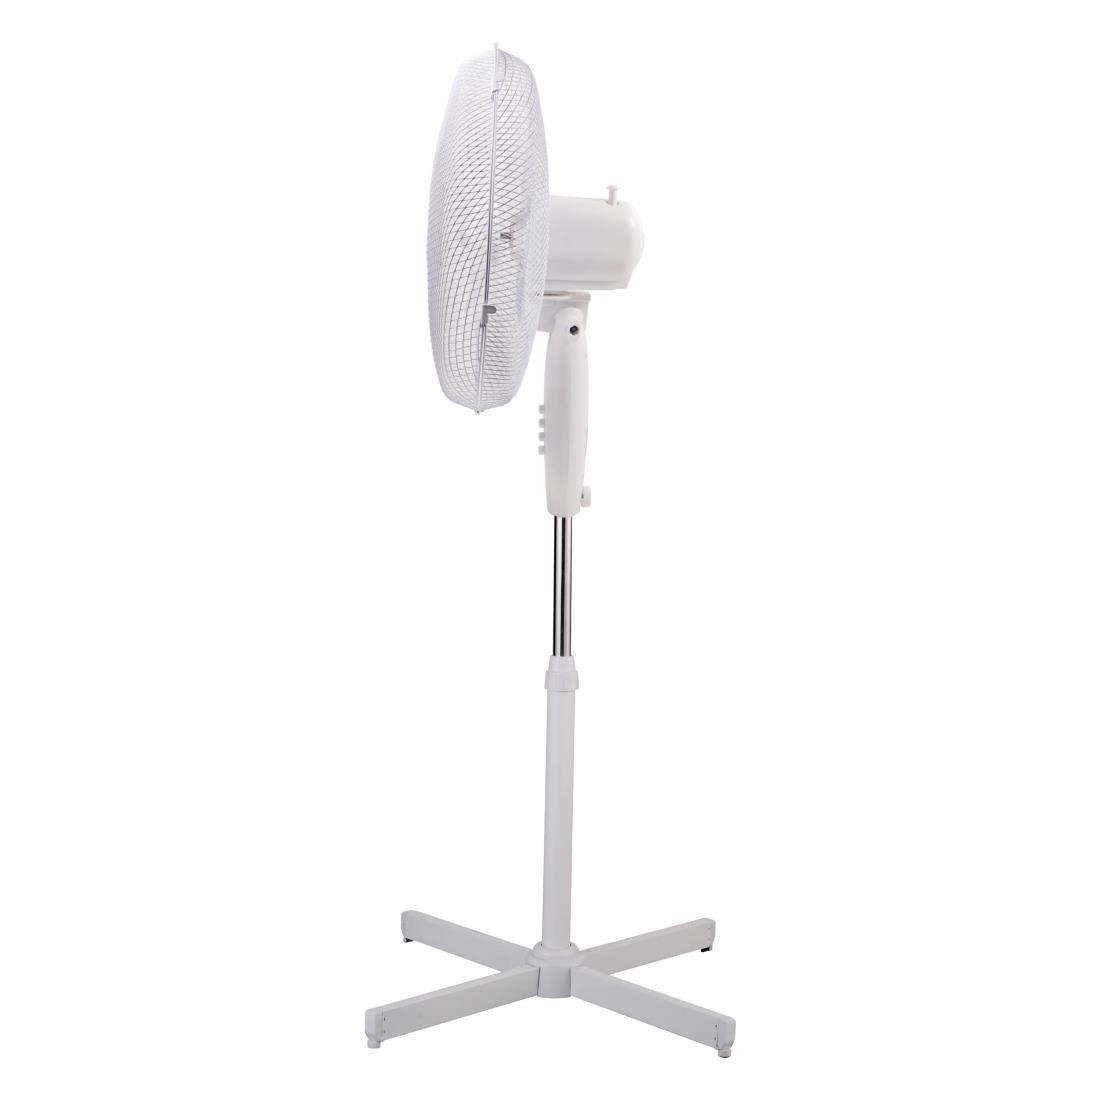 Igenix 16" Oscillating White Stand Fan - GR389  - 2